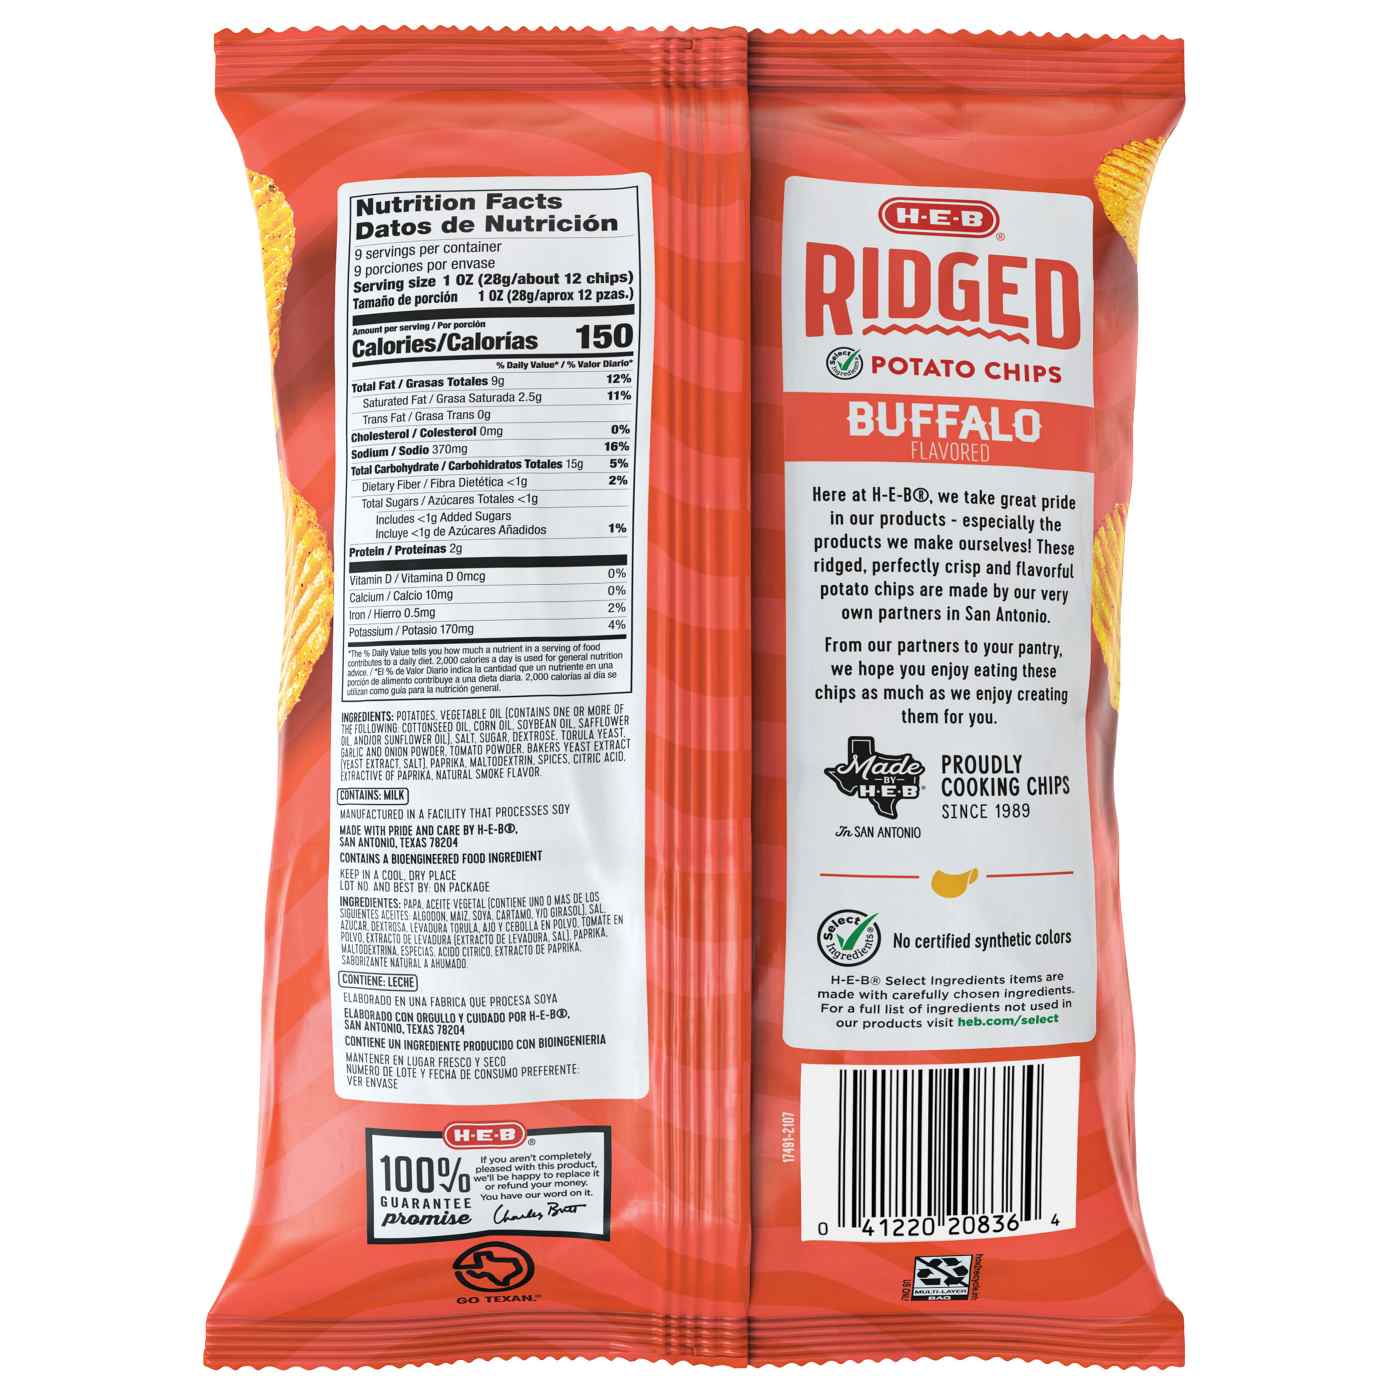 H-E-B Ridged Potato Chips - Buffalo Flavored; image 3 of 3